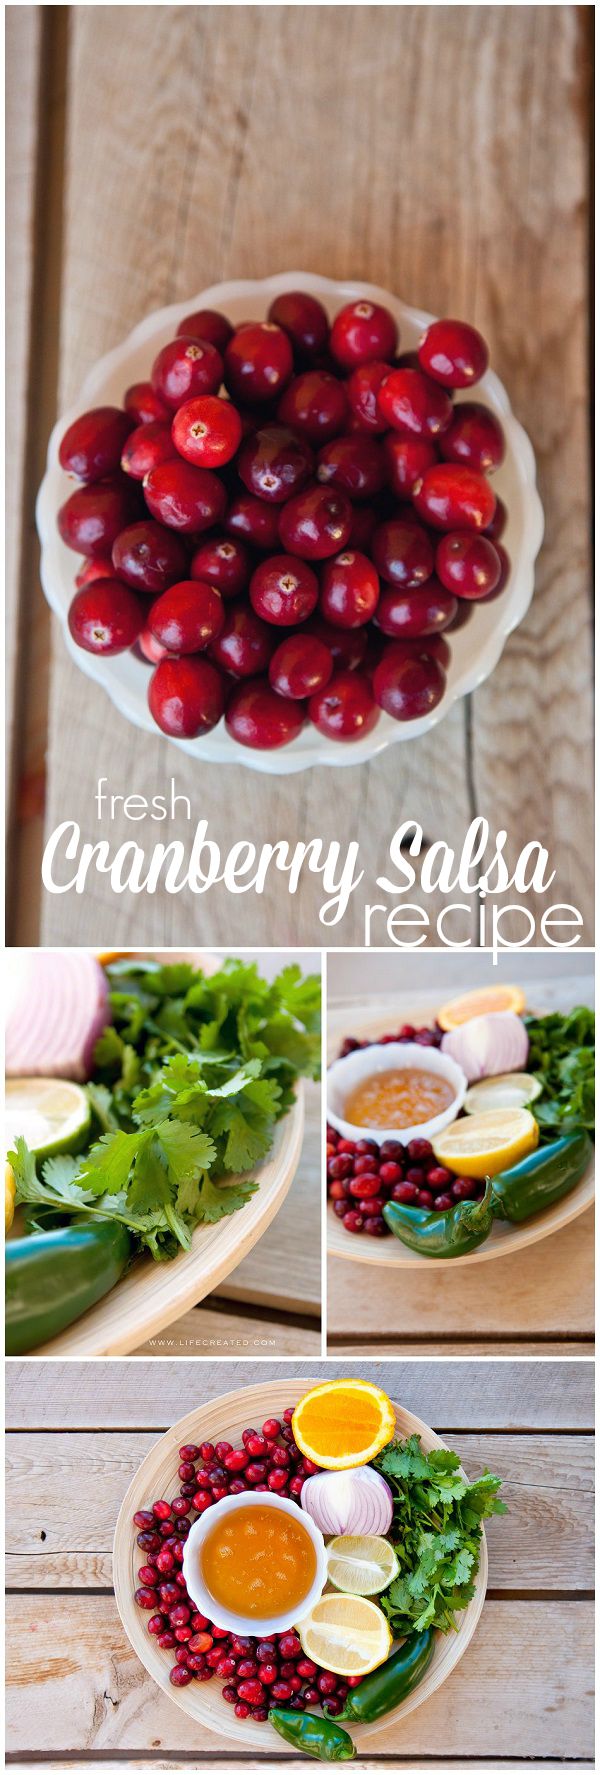 Fresh Cranberry salsa recipe